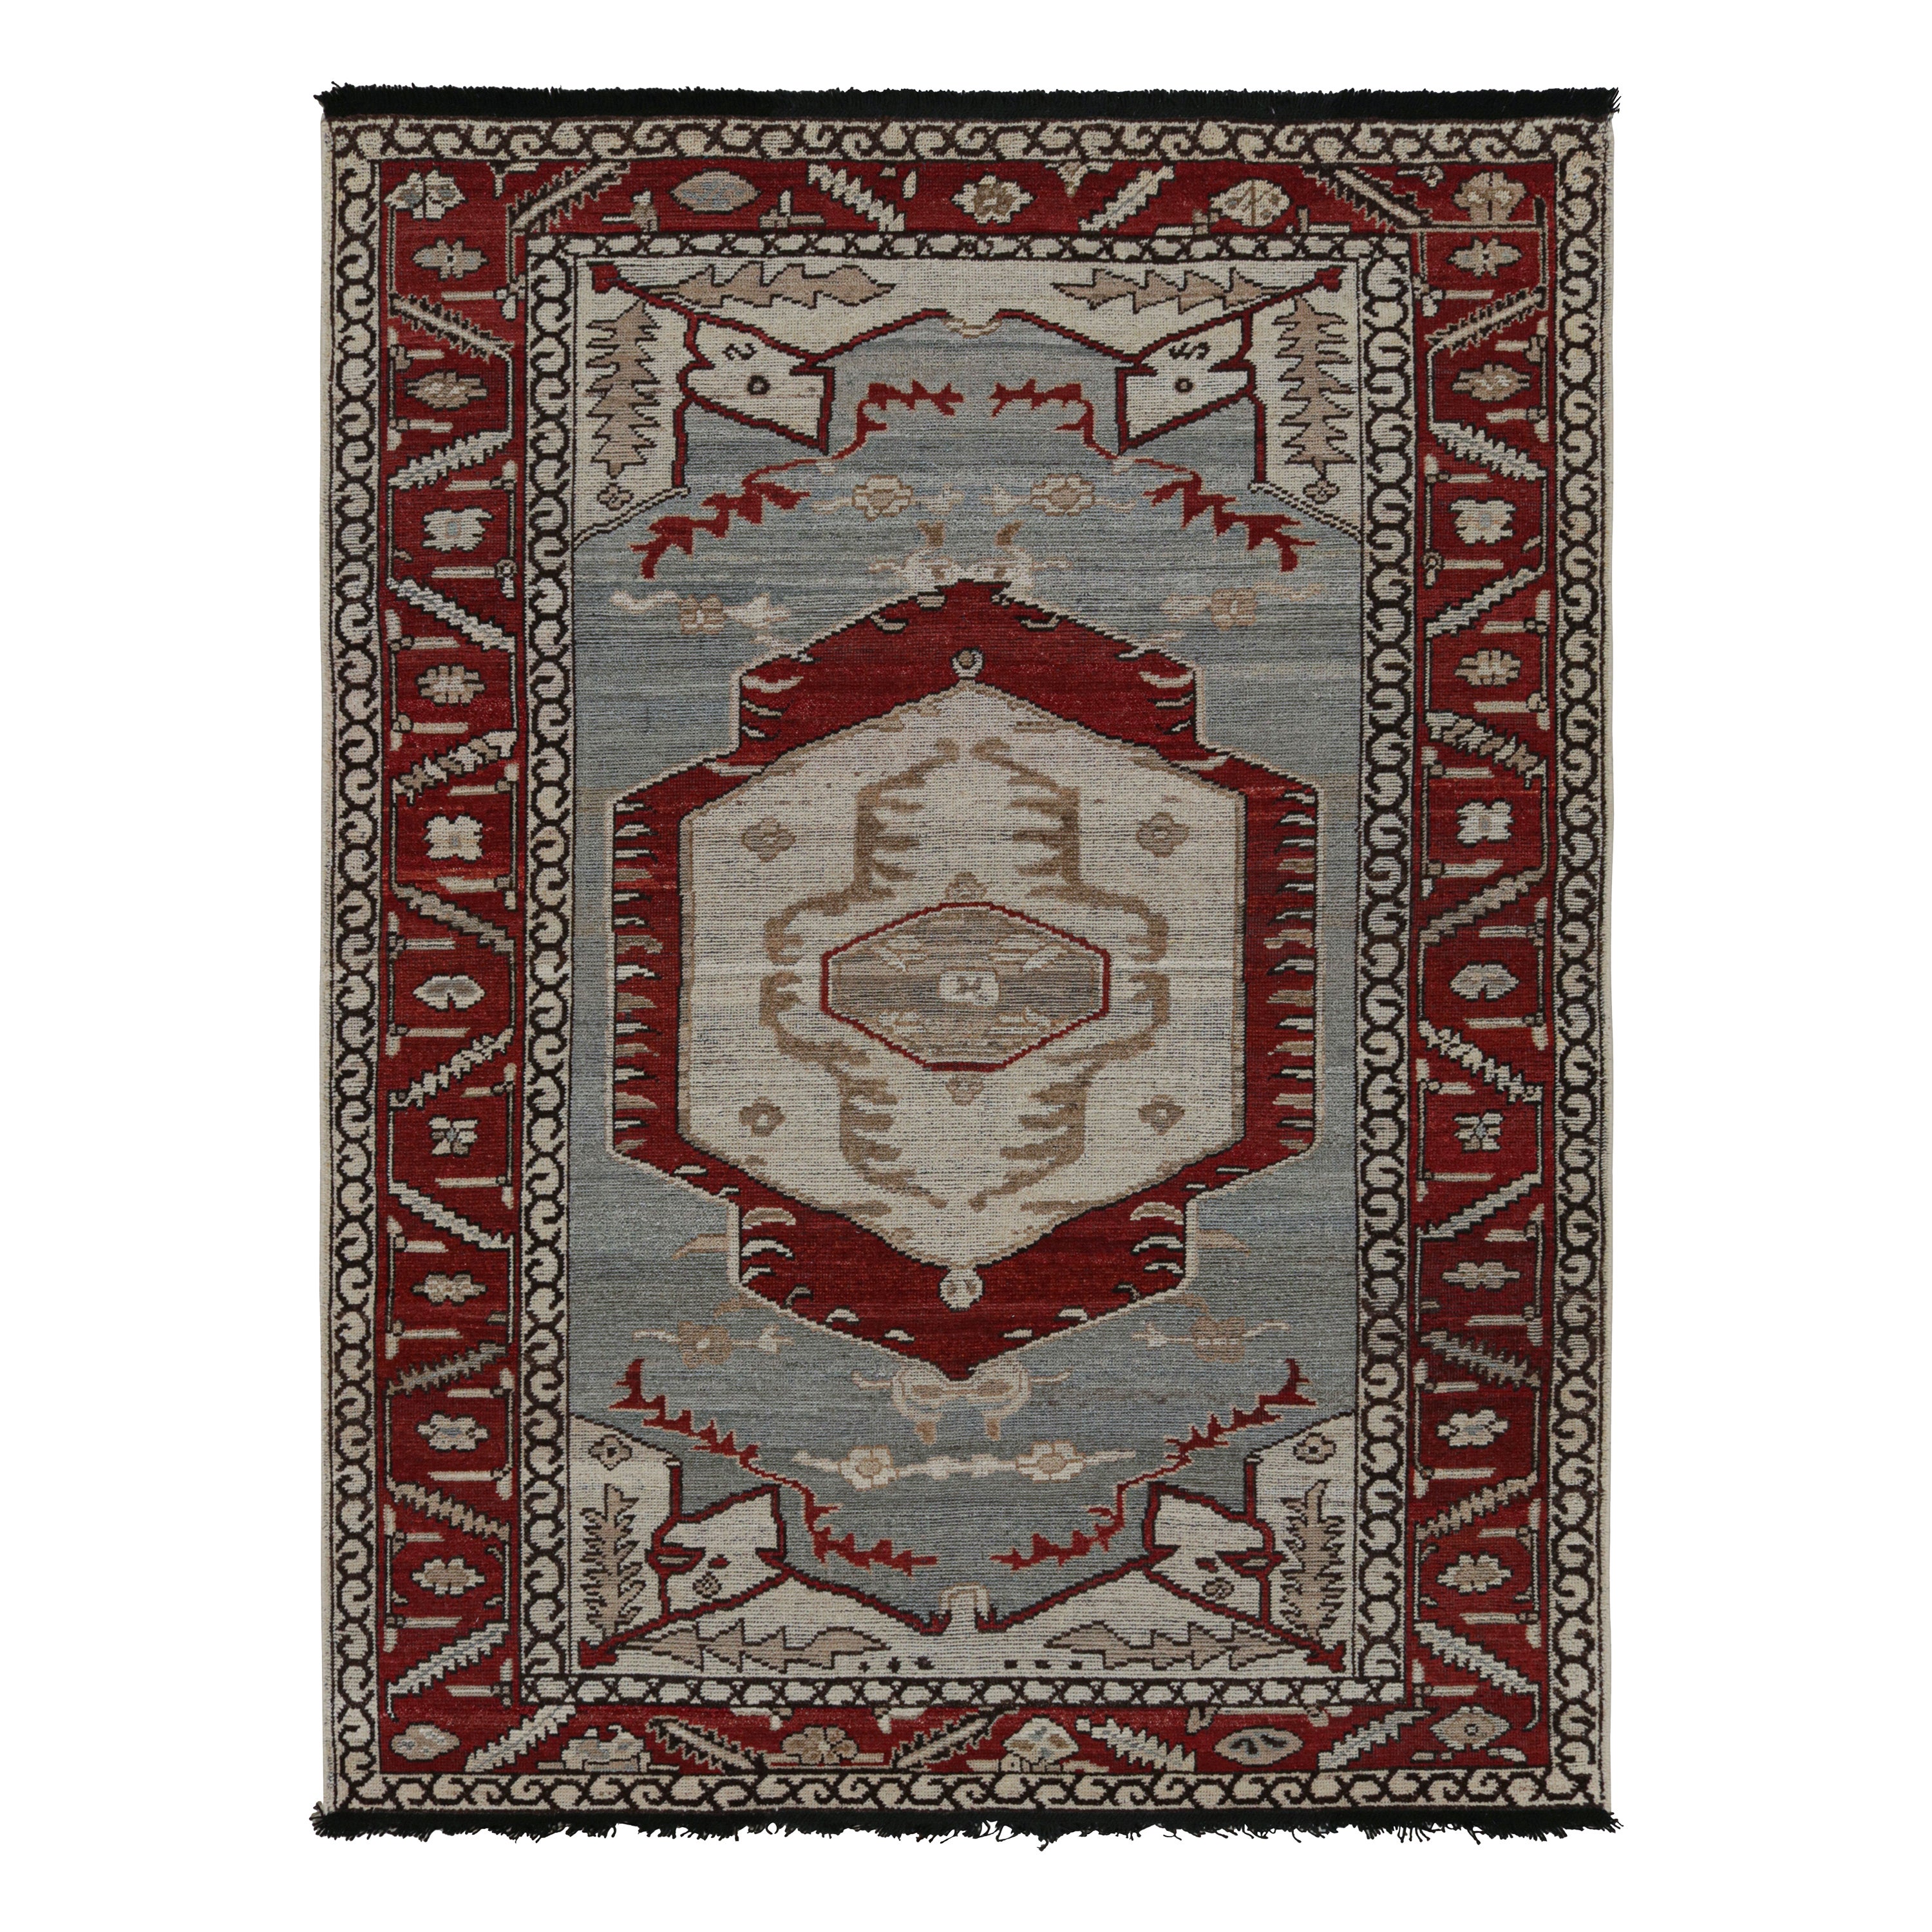 Rug & Kilim's Tribal Style Teppich in Rot und Blau mit Medaillon